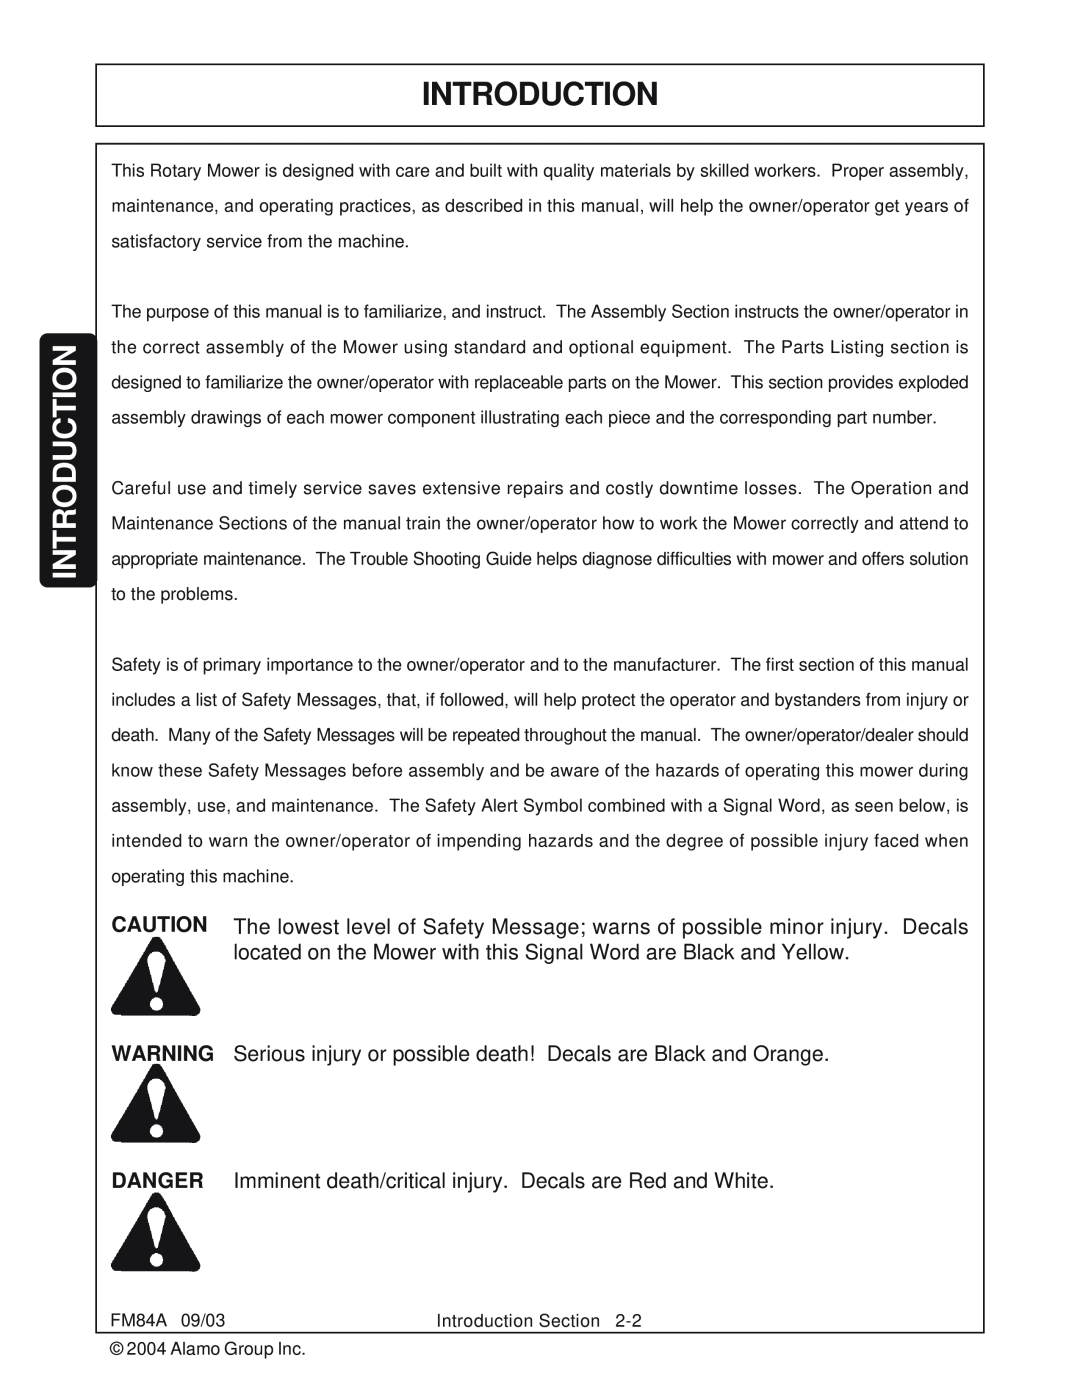 Servis-Rhino FM84A manual Introduction 